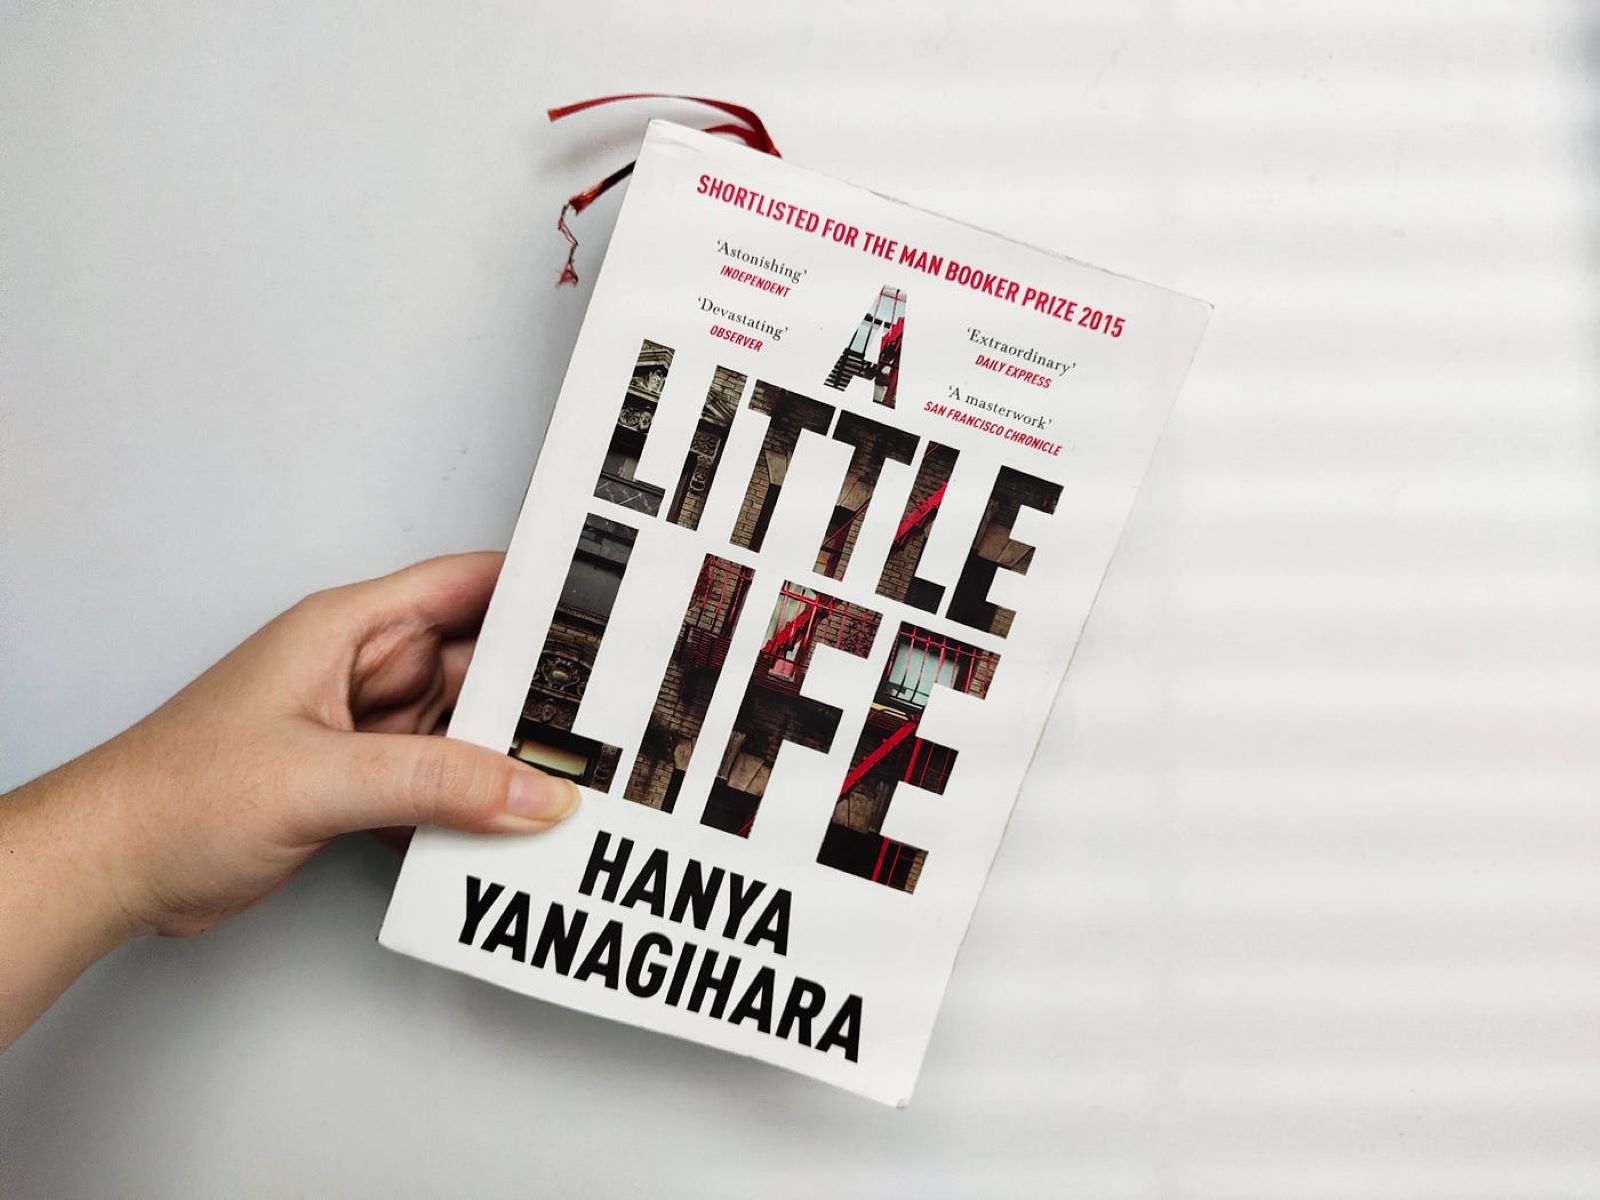 Little life книга. Янагихара. Маленькая жизнь Ханья Янагихара. Hanya Yanagihara a little Life краткое описание.